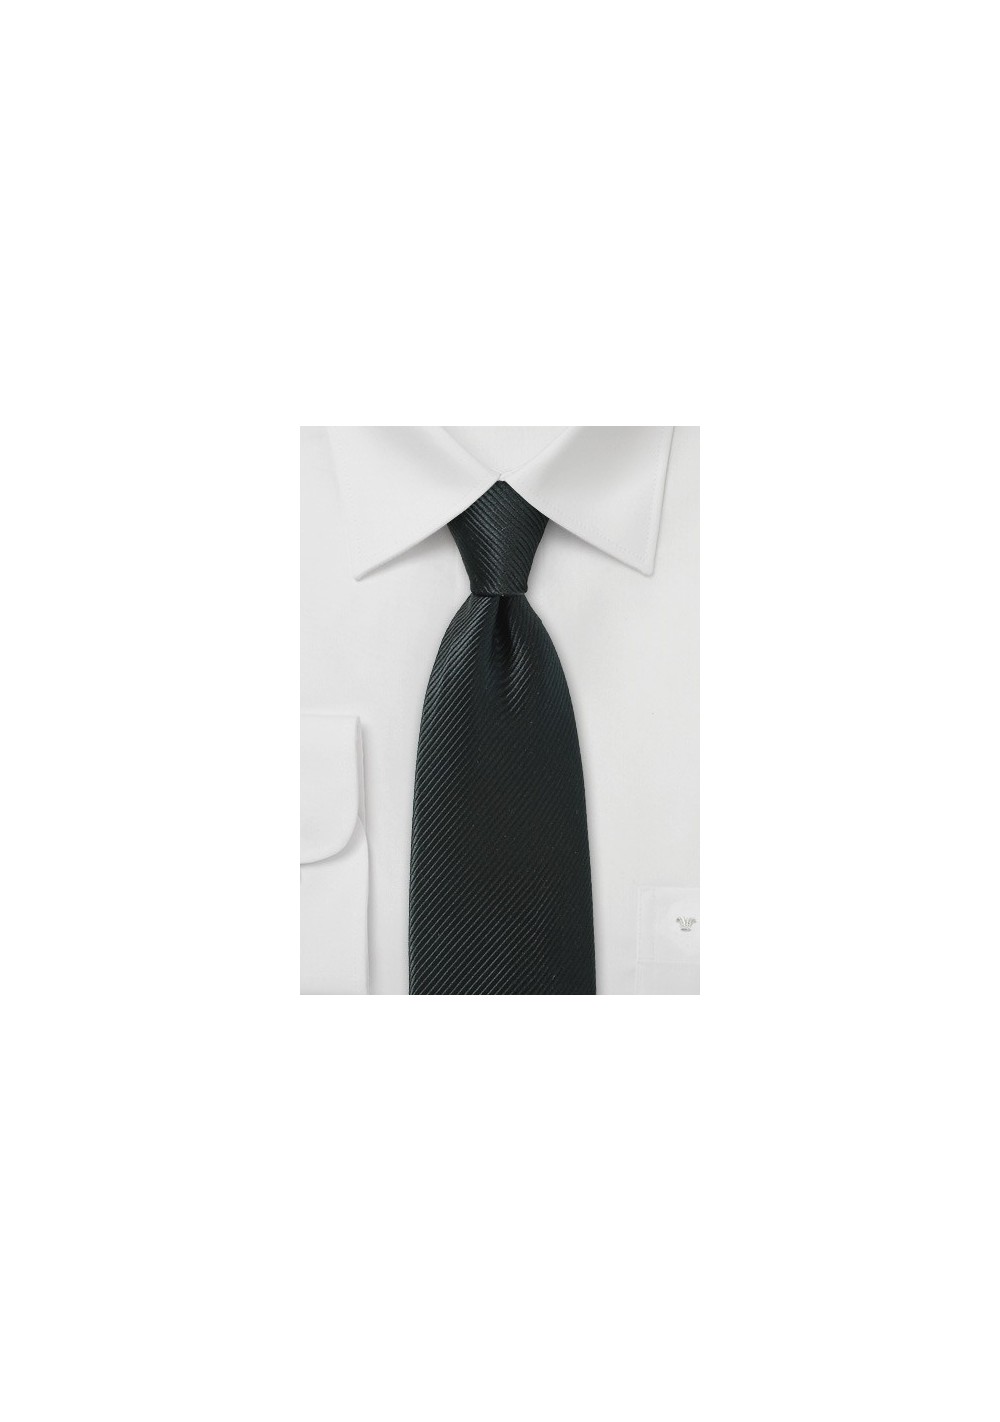 Jet Black Necktie with Sharp Ribbed Texture